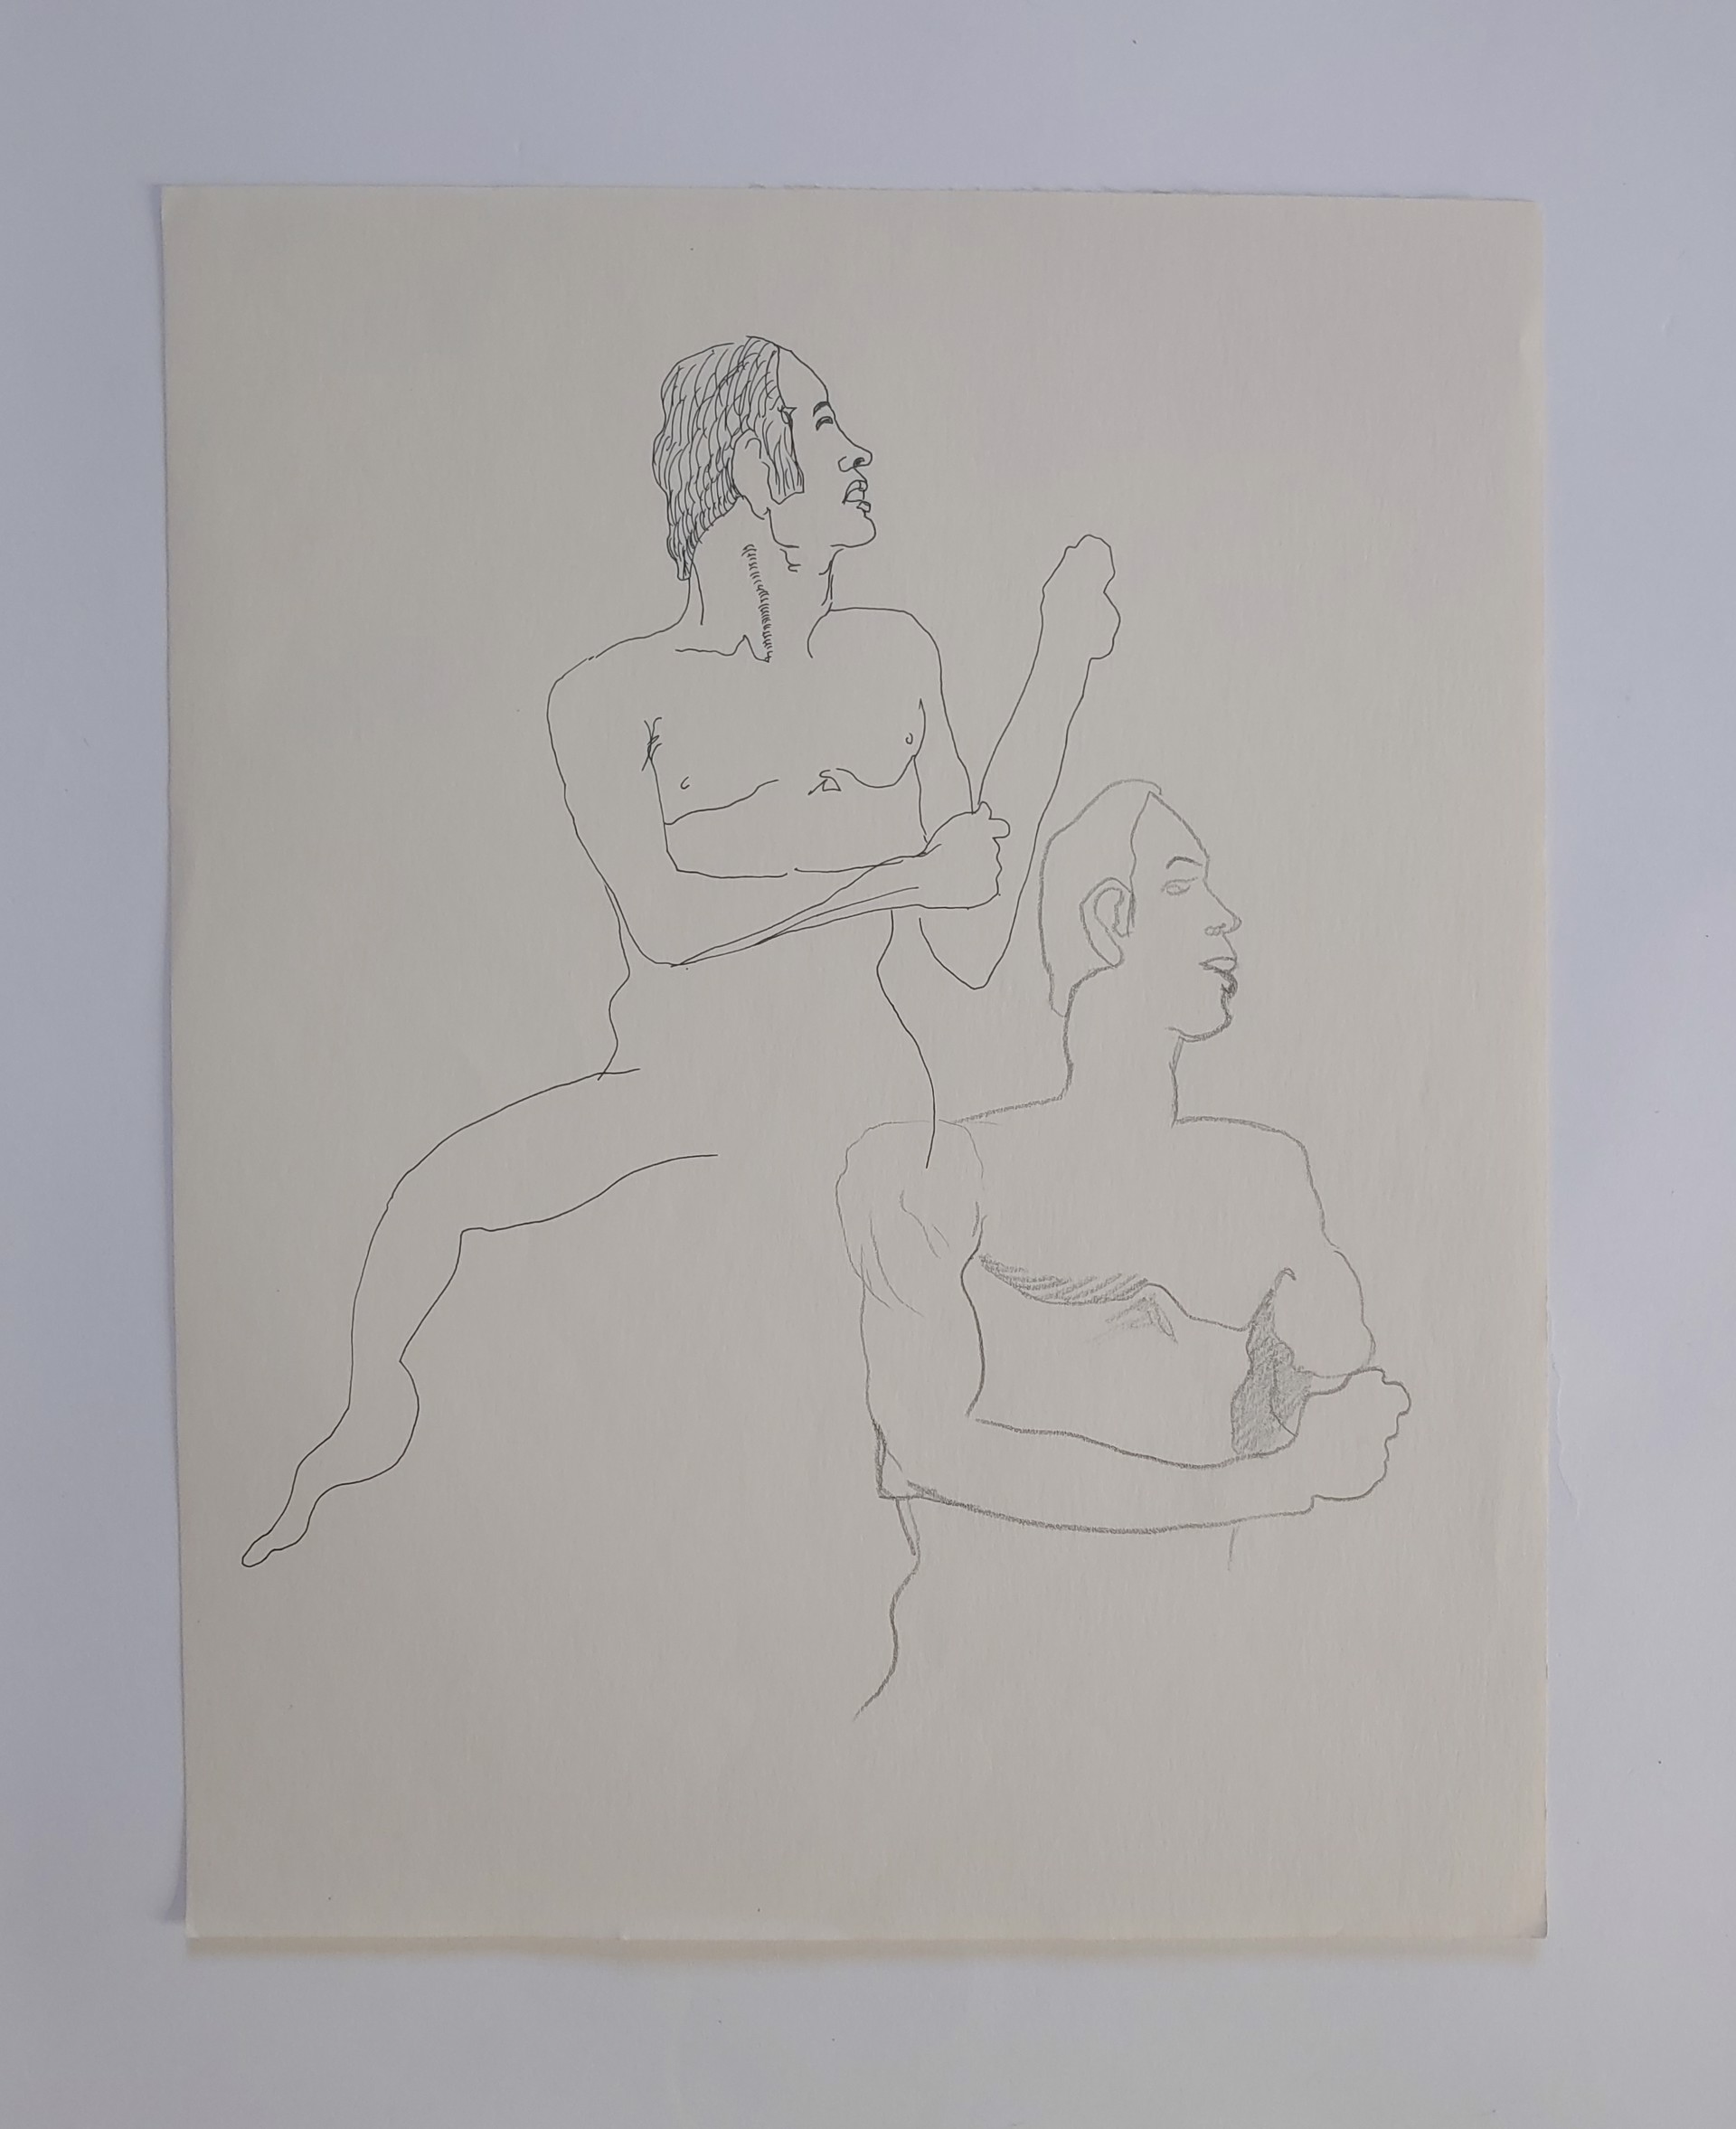 Turning Man - Drawing by David Amdur